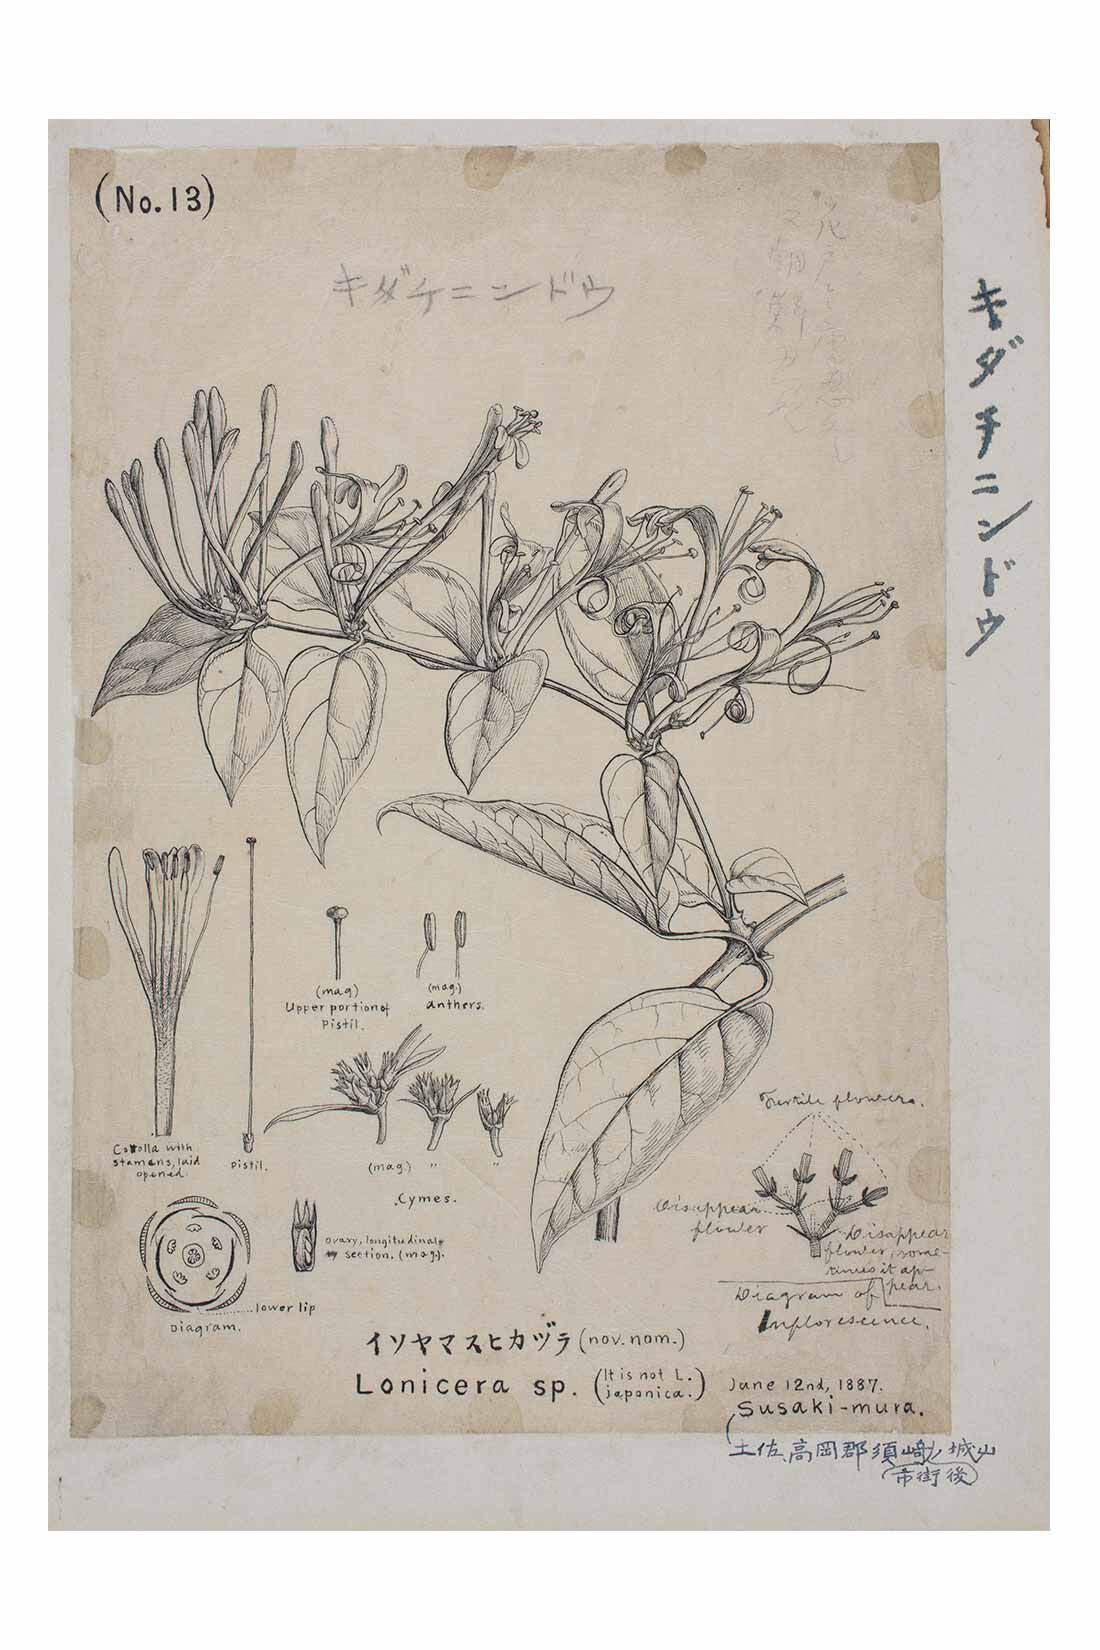 IEDIT|牧野植物園×IEDIT[イディット]コラボ 牧野博士の描いたキダチニンドウのトートバッグ〈ブラウン〉|1887年 明治時代に和紙に筆で描かれた「キダチニンドウ」